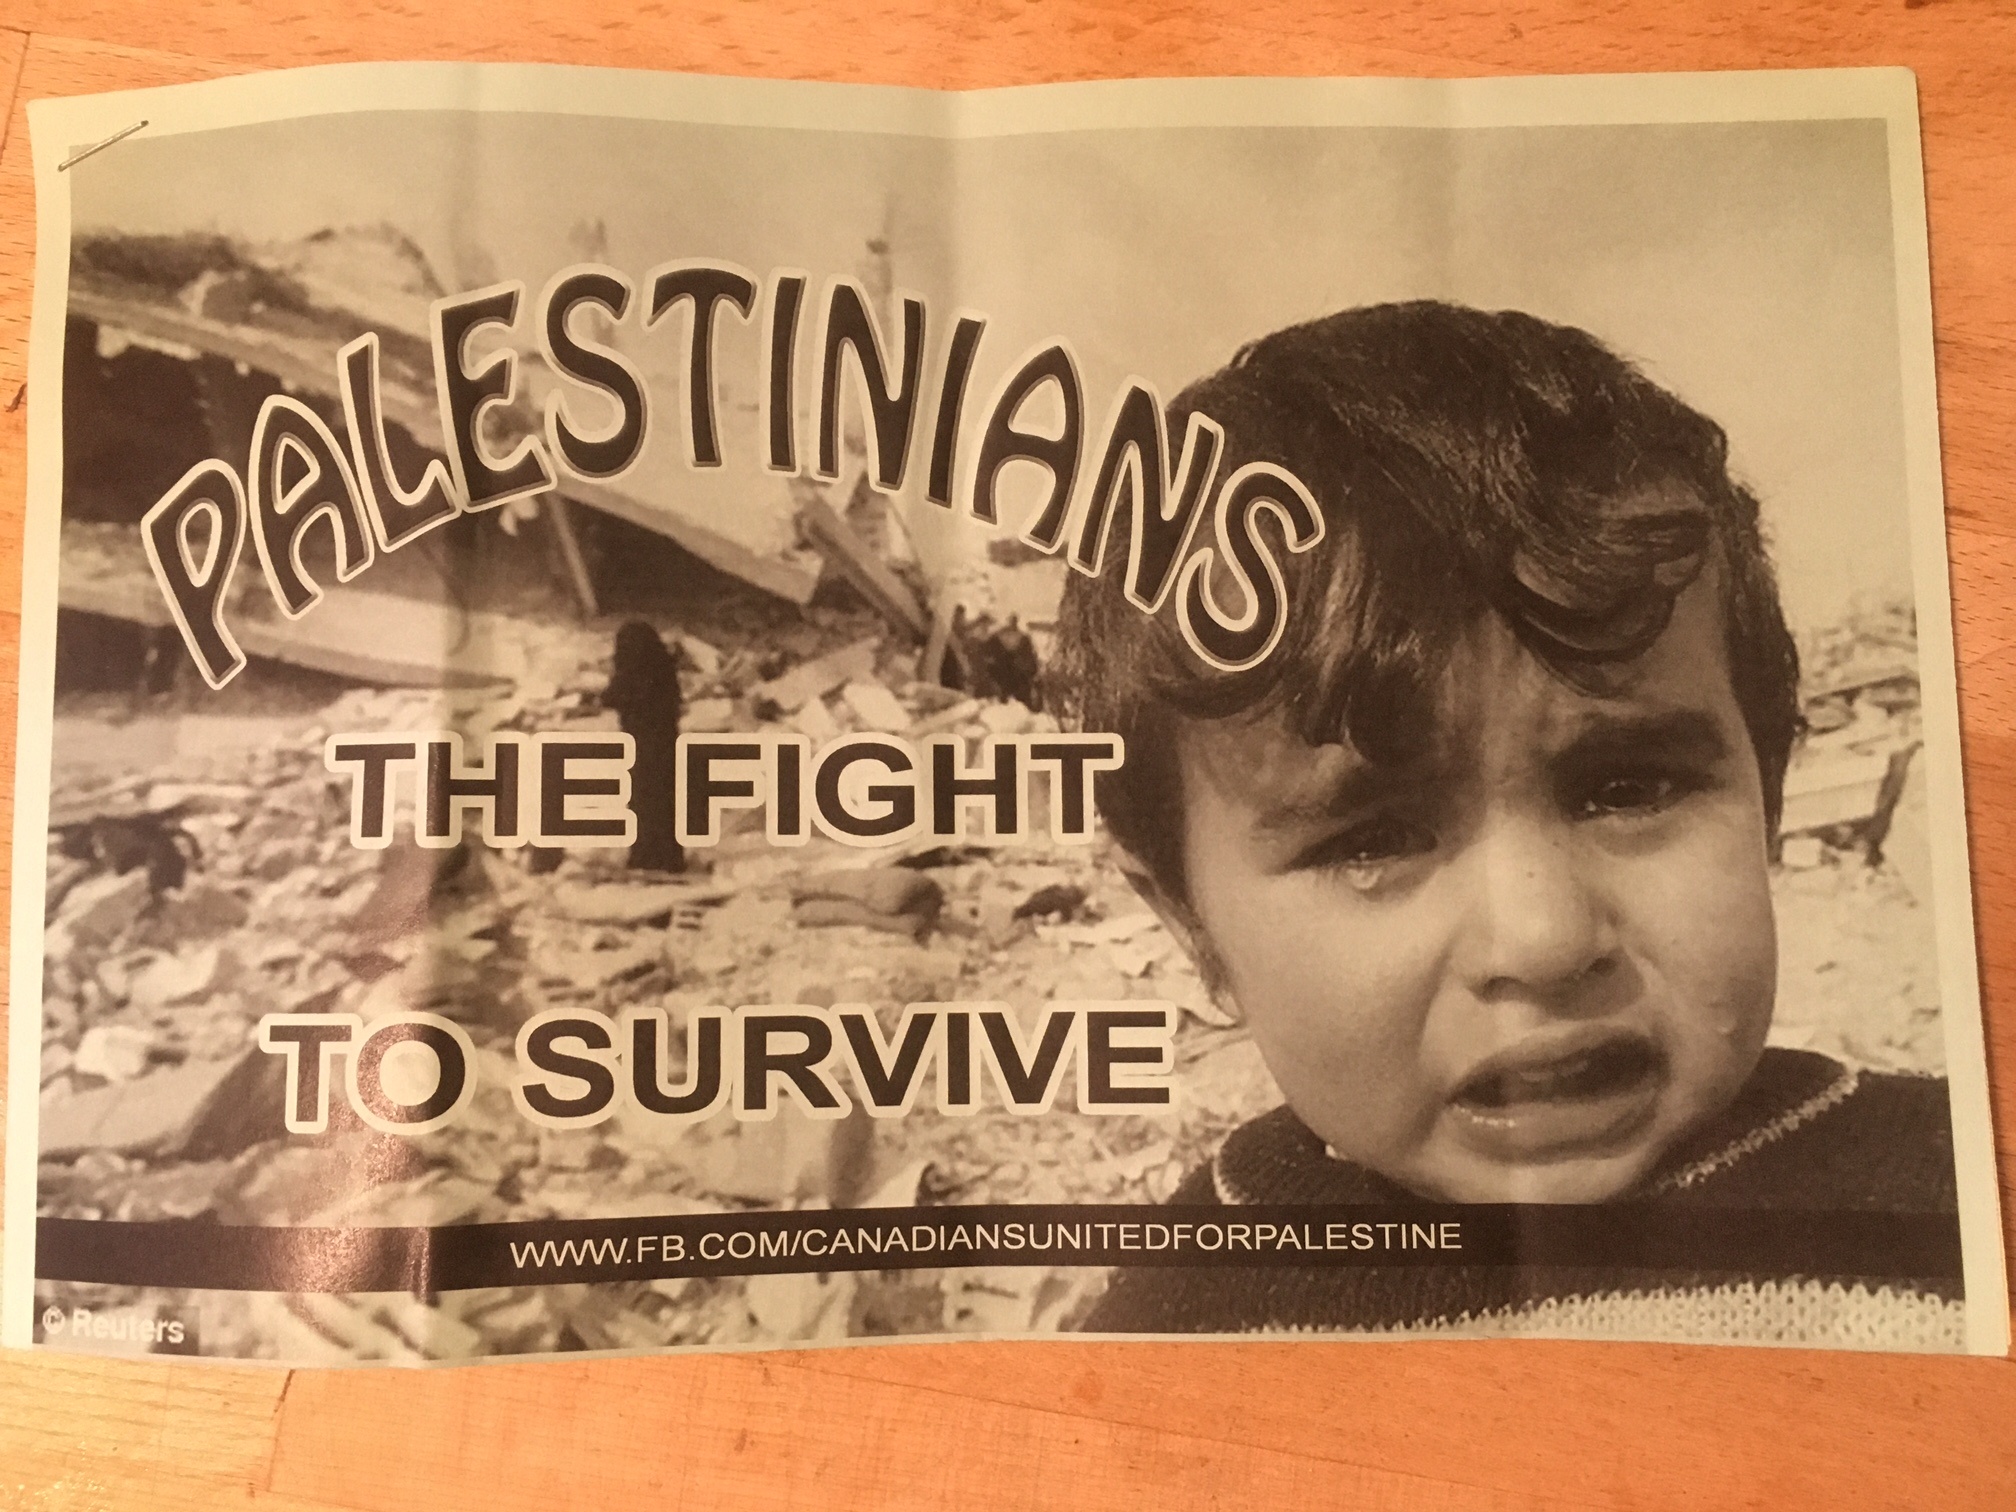 Free Palestine Flyer with Sad Child.JPG